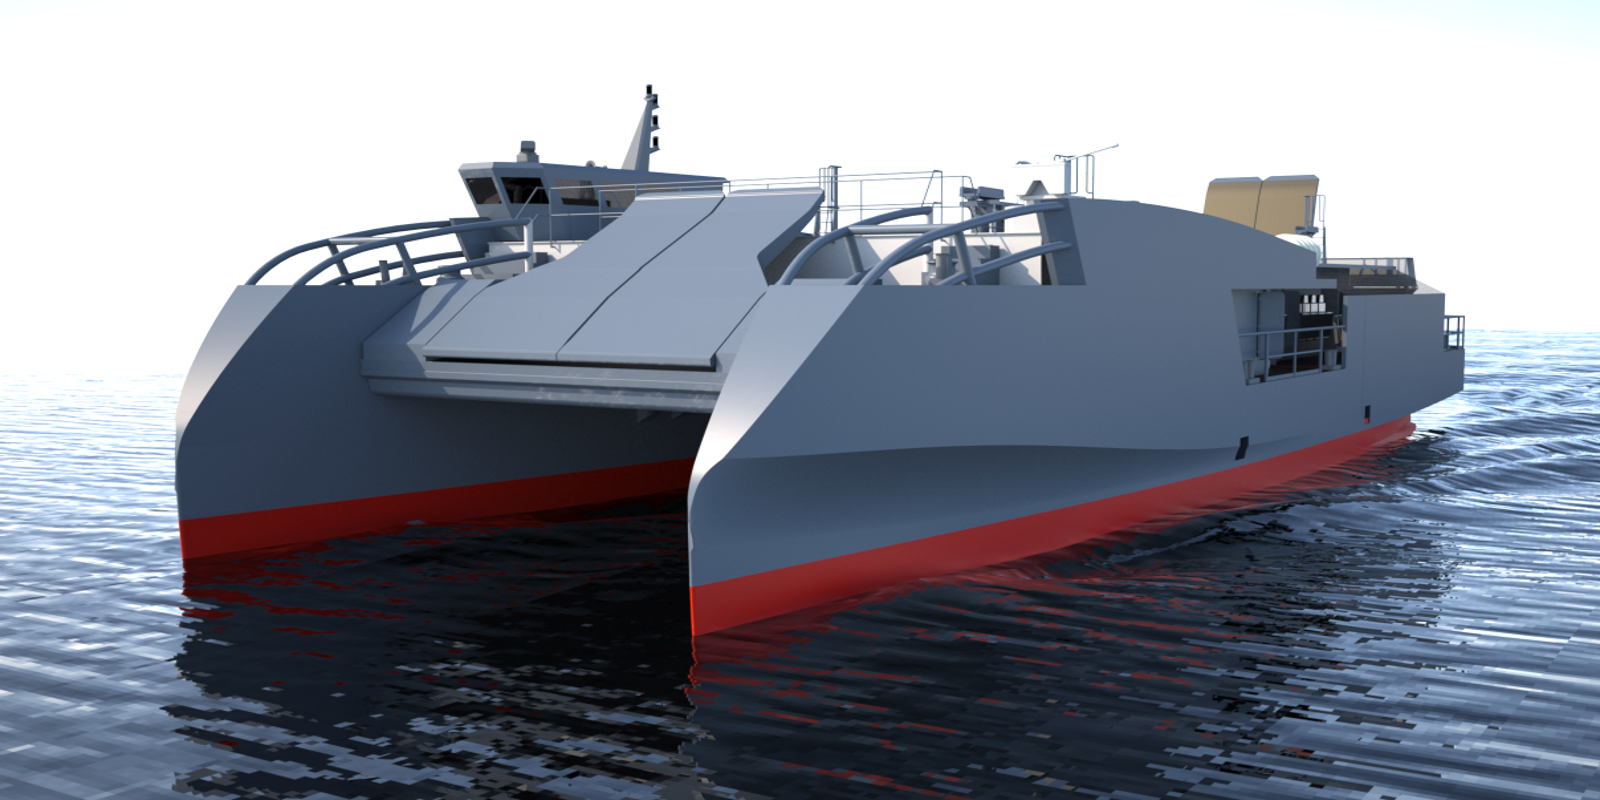 Marinette Shipbuilder Falls Short In Bid For 1 Billion Army Contract